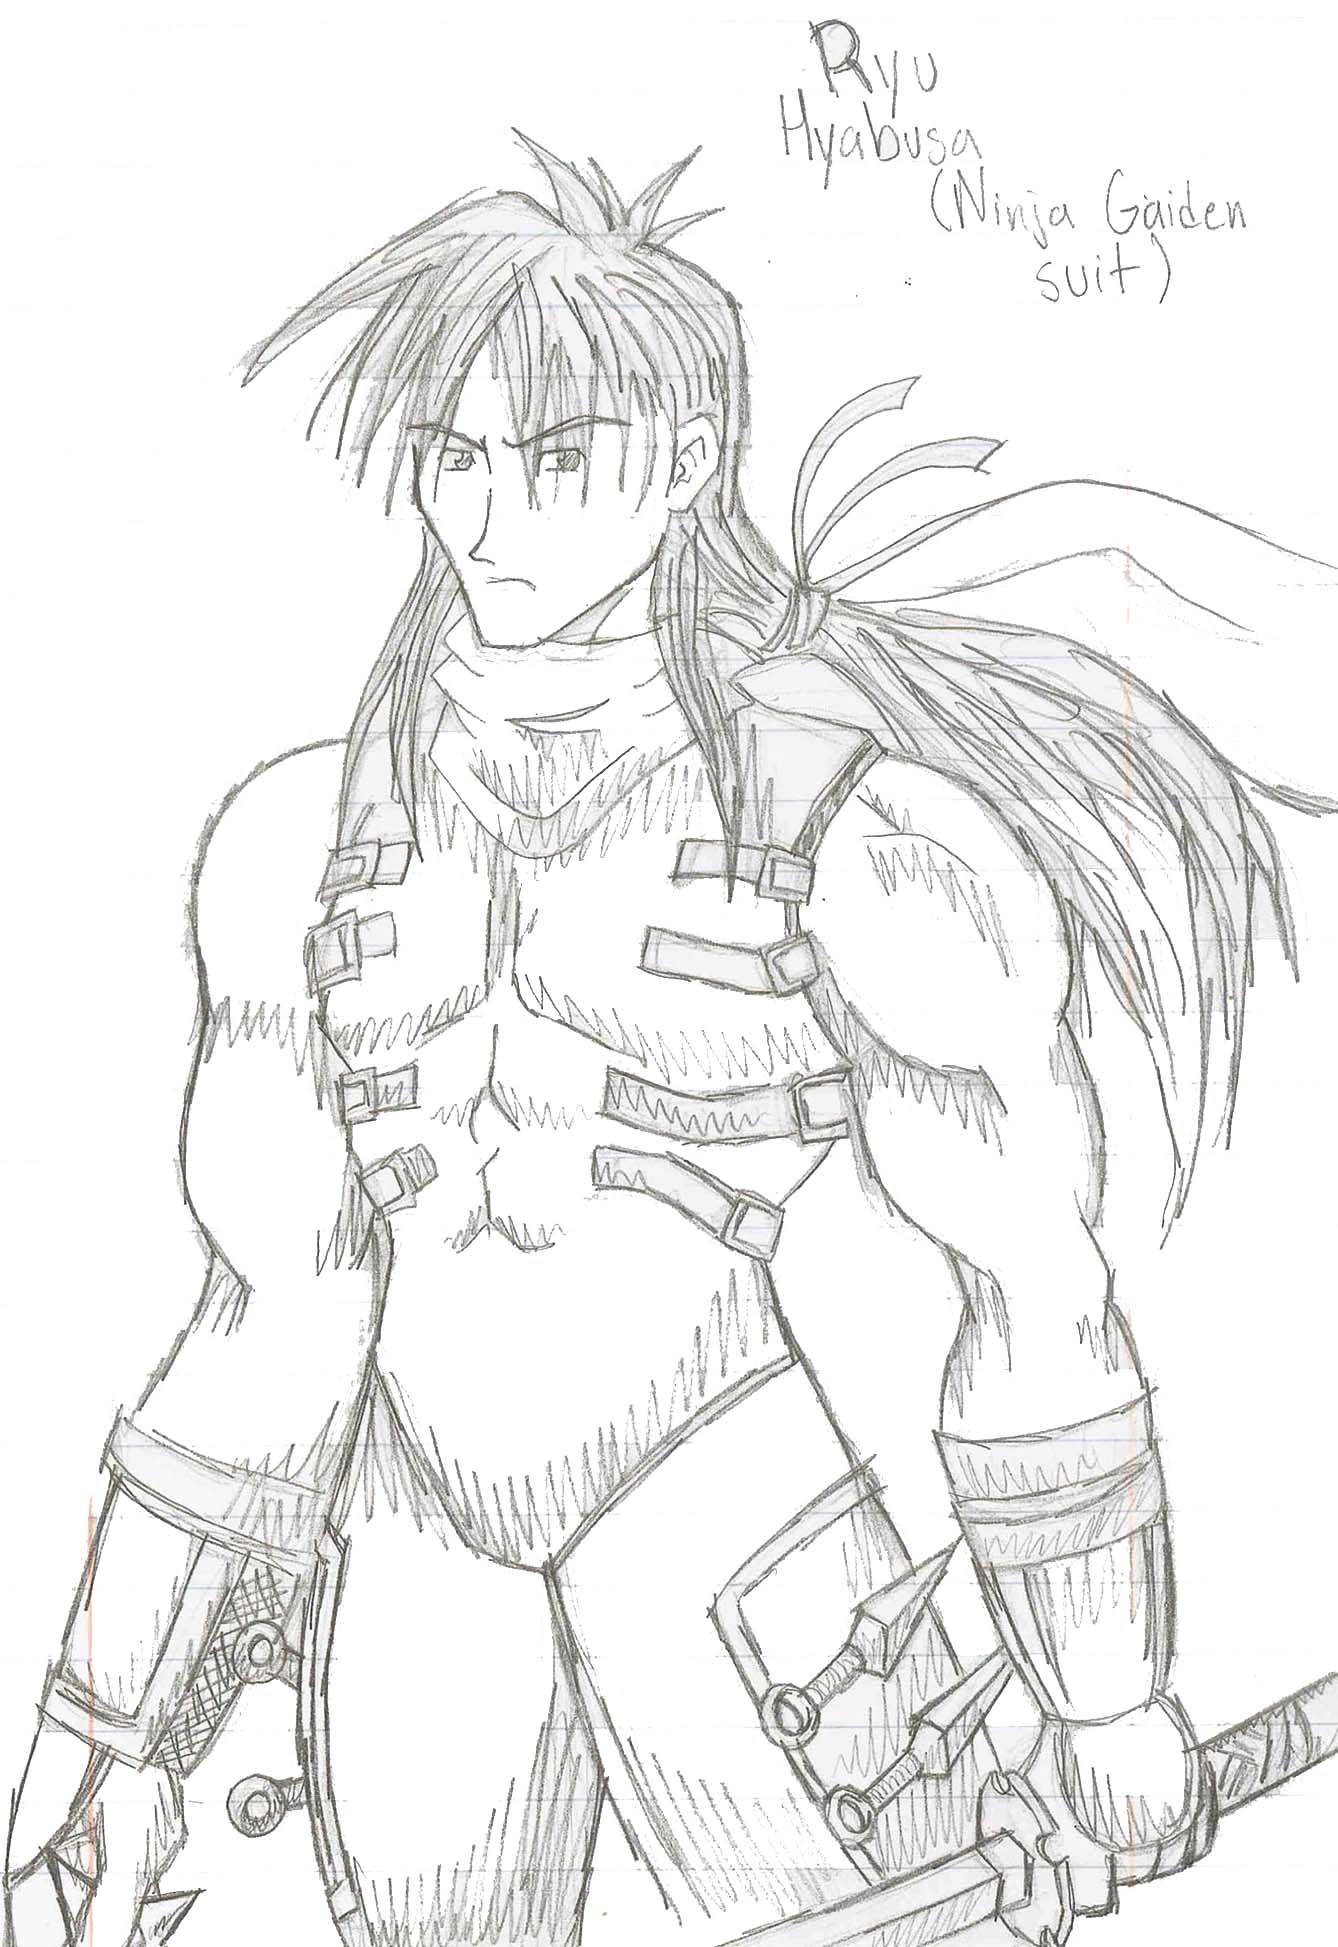 Ryu Hyabusa- Ninja Gaiden Suit by Black_Wind